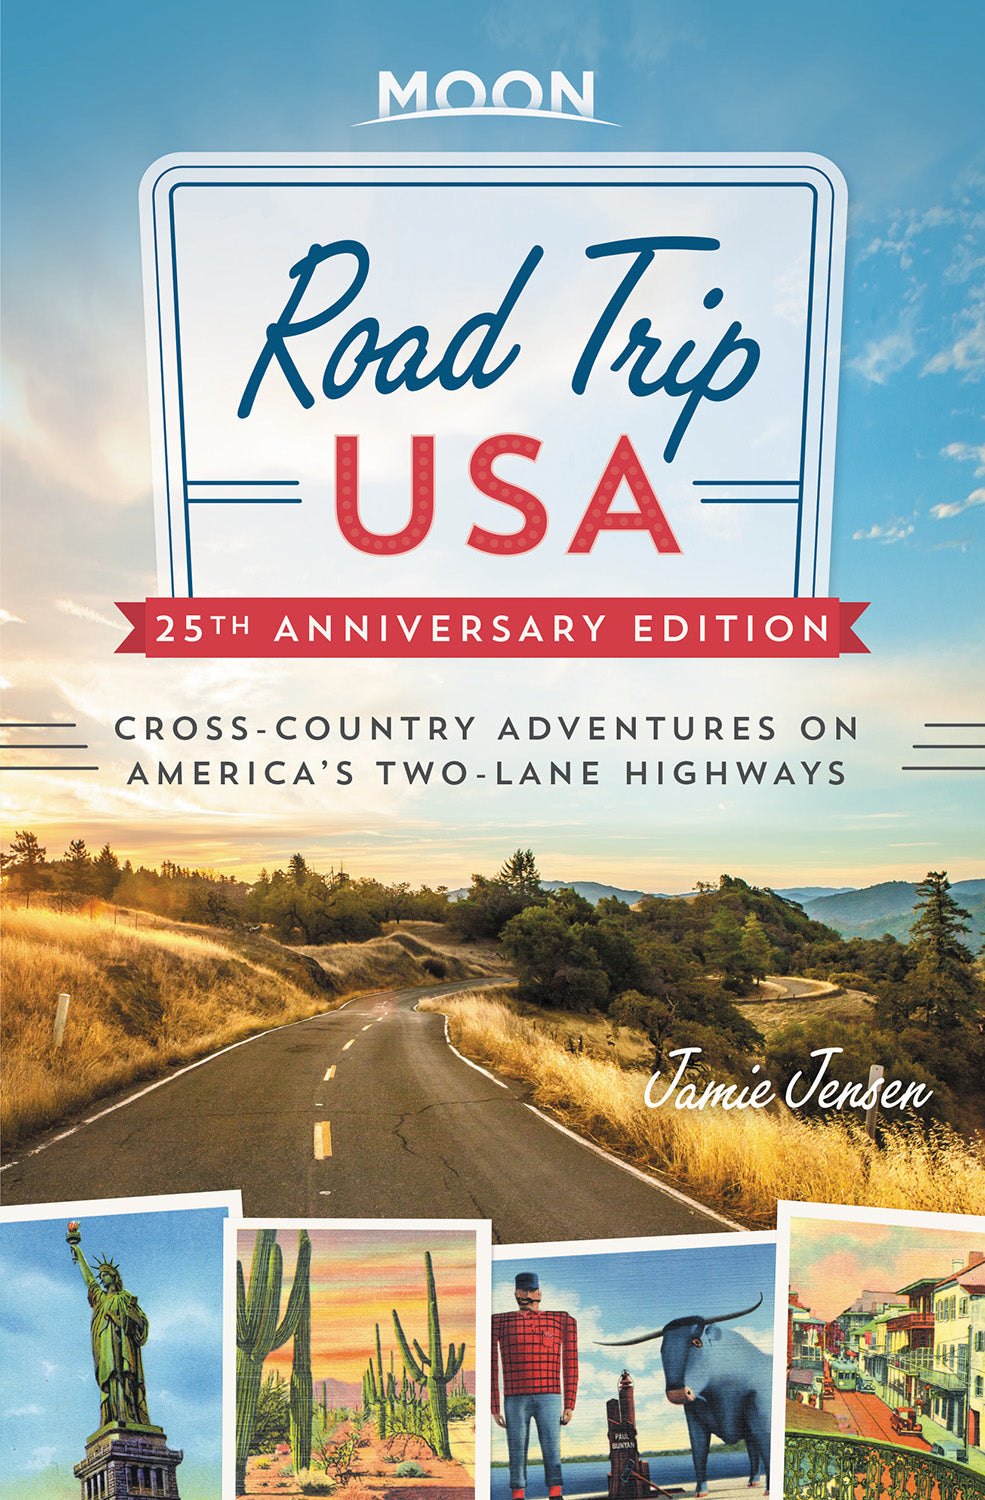 Moon Travel Guide: Road Trip USA 25th Anniversary Edition.